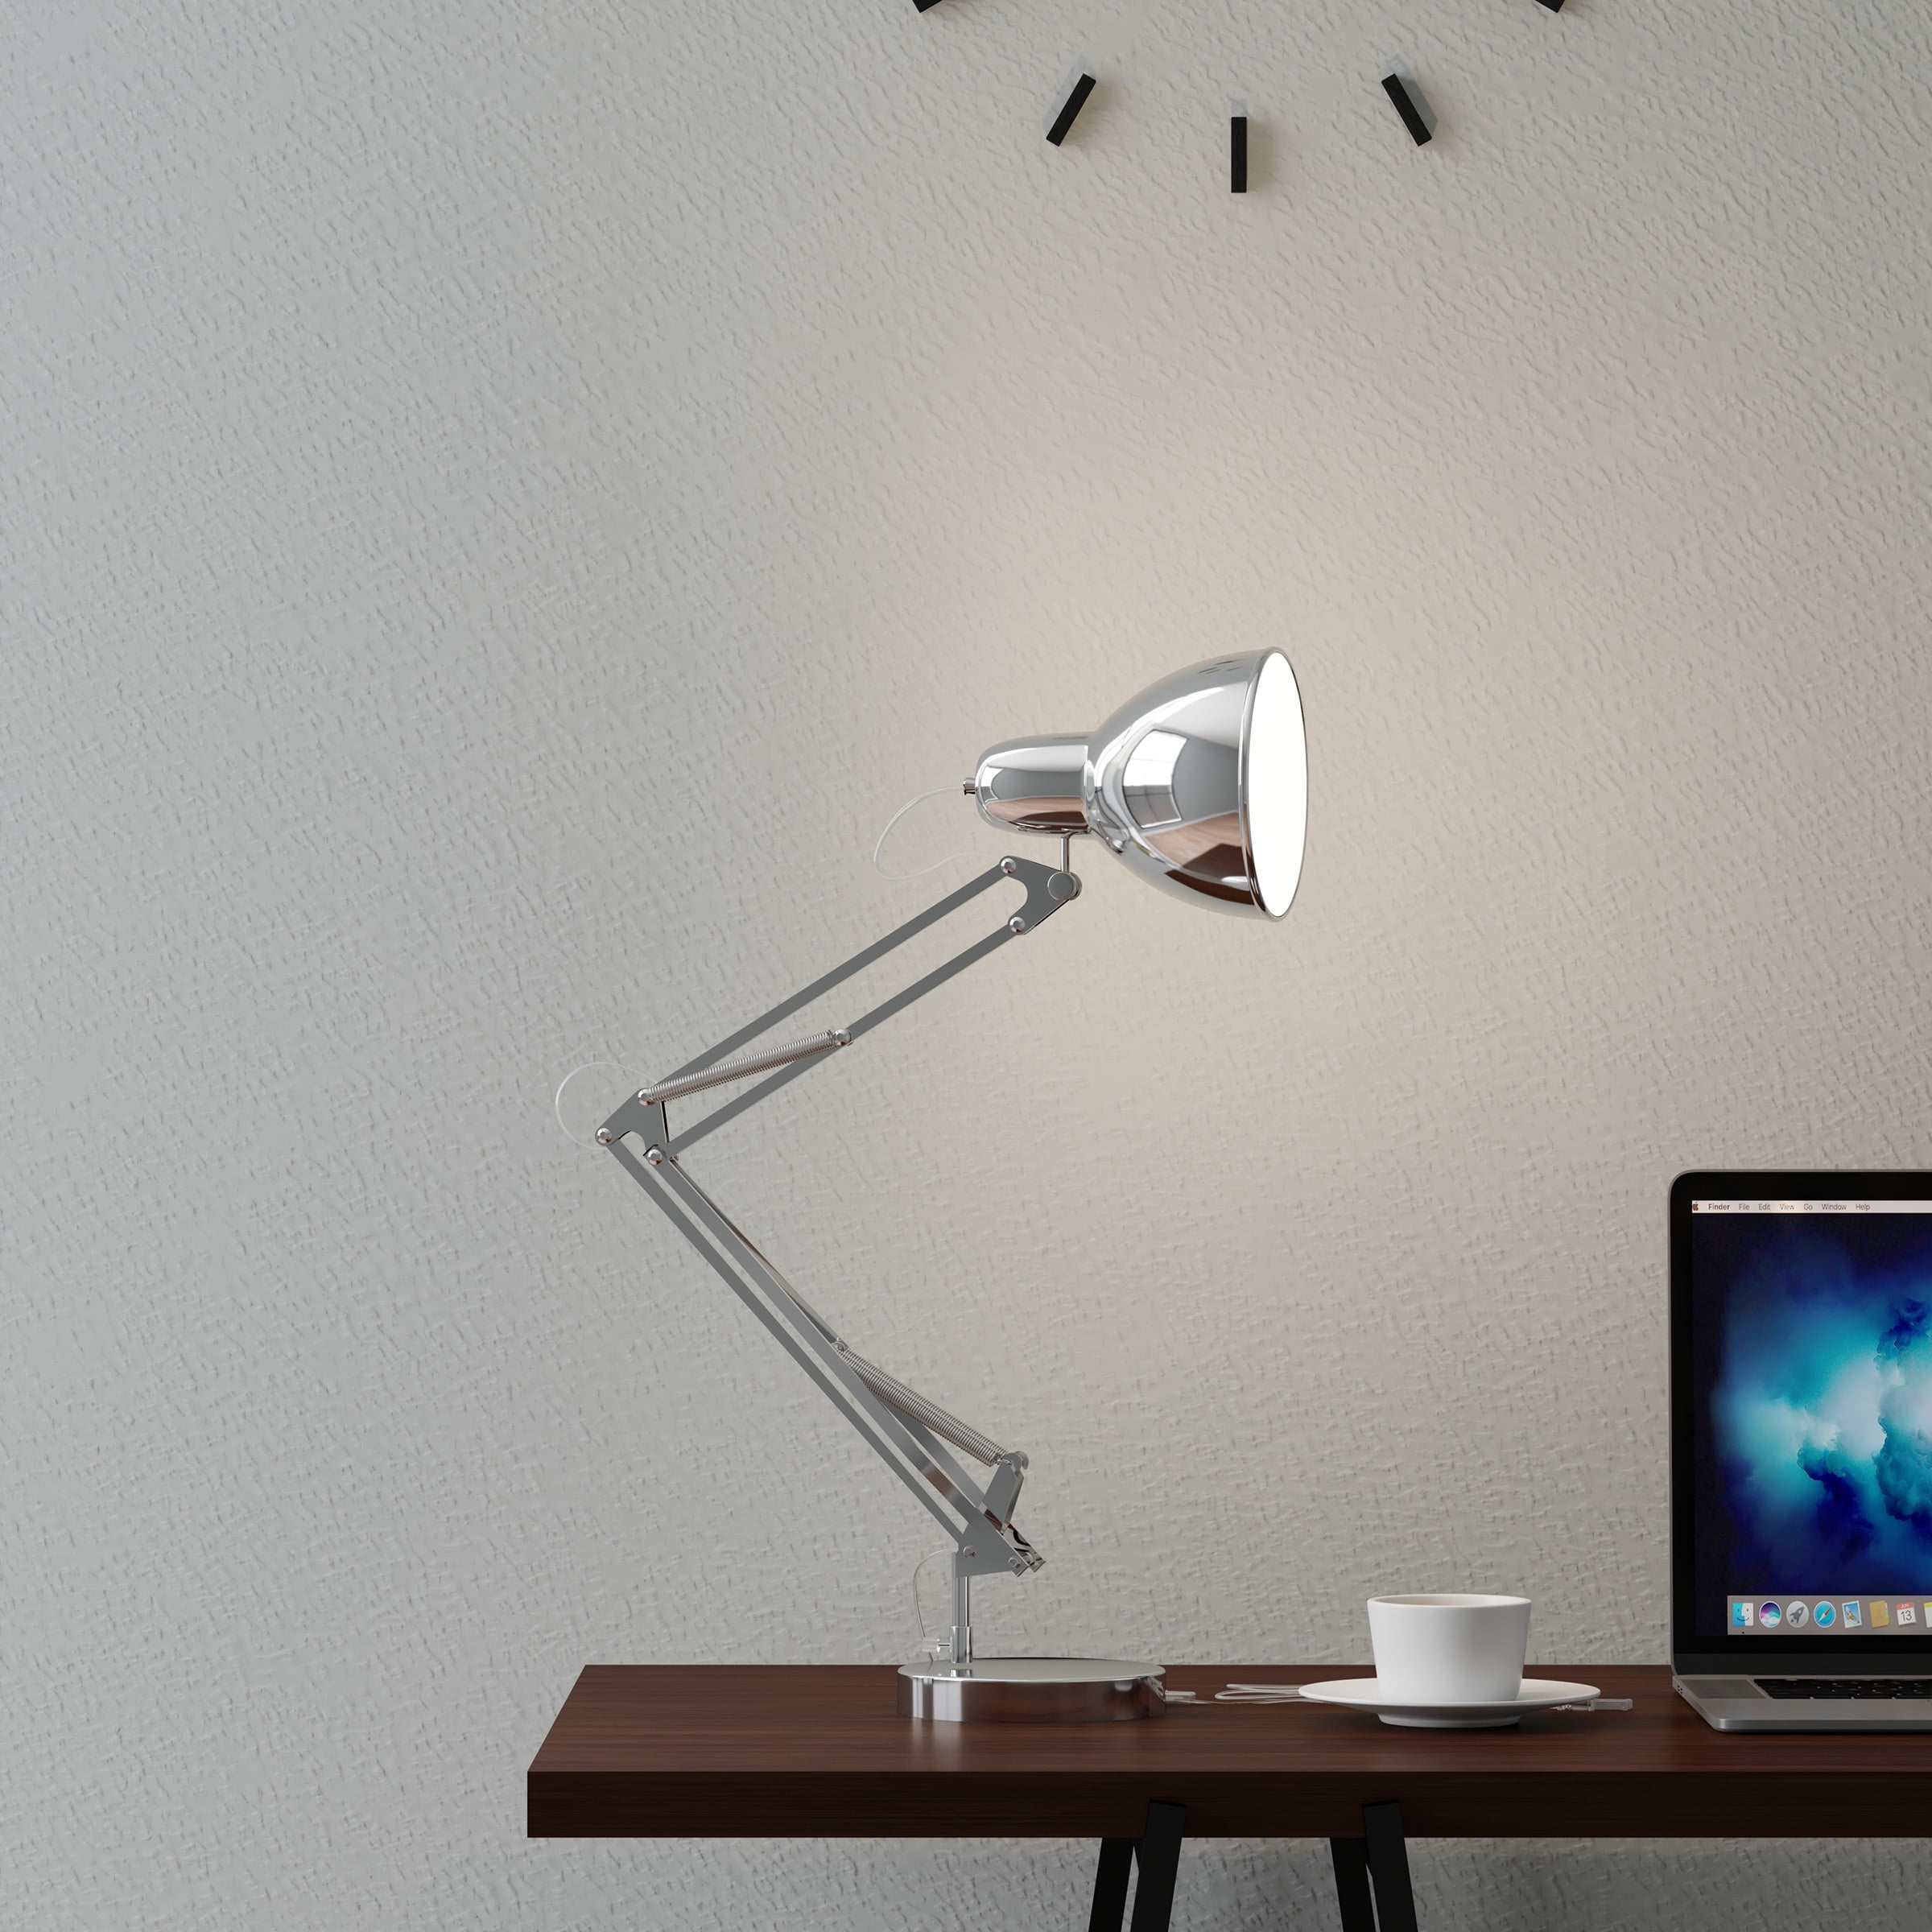 Architect Desk Lamp- LED Task Light with Adjustable Swing Arm for Home